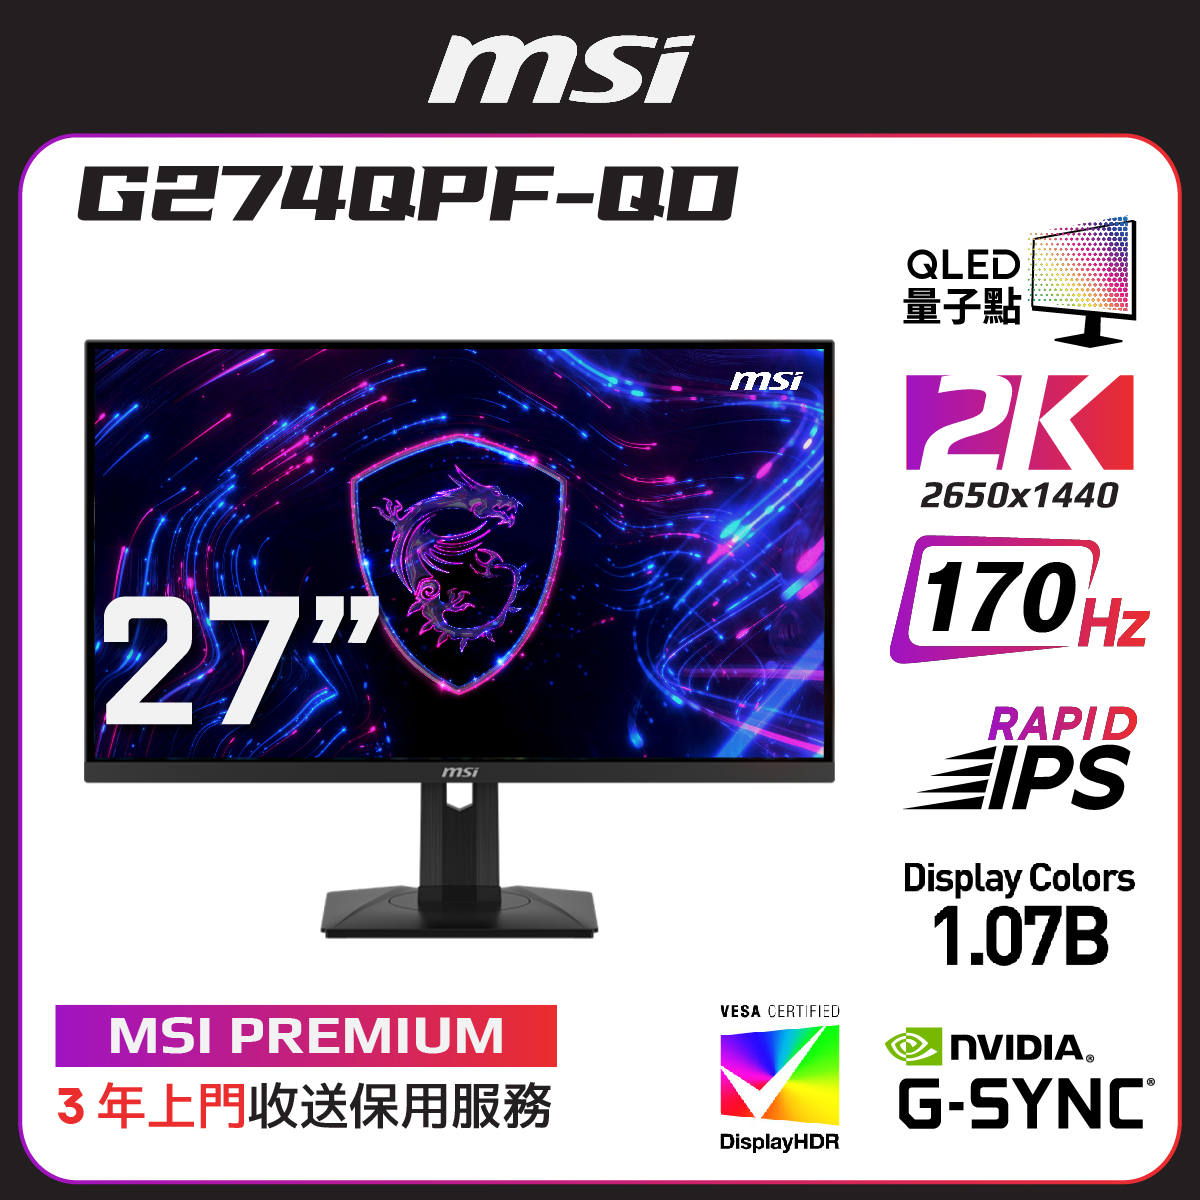 MSI 微星 G274QPF-QD 電競顯示器 (27 吋 QHD 170Hz RAPID IPS HDR400 G-Sync Compatible) - 2560 x 1440